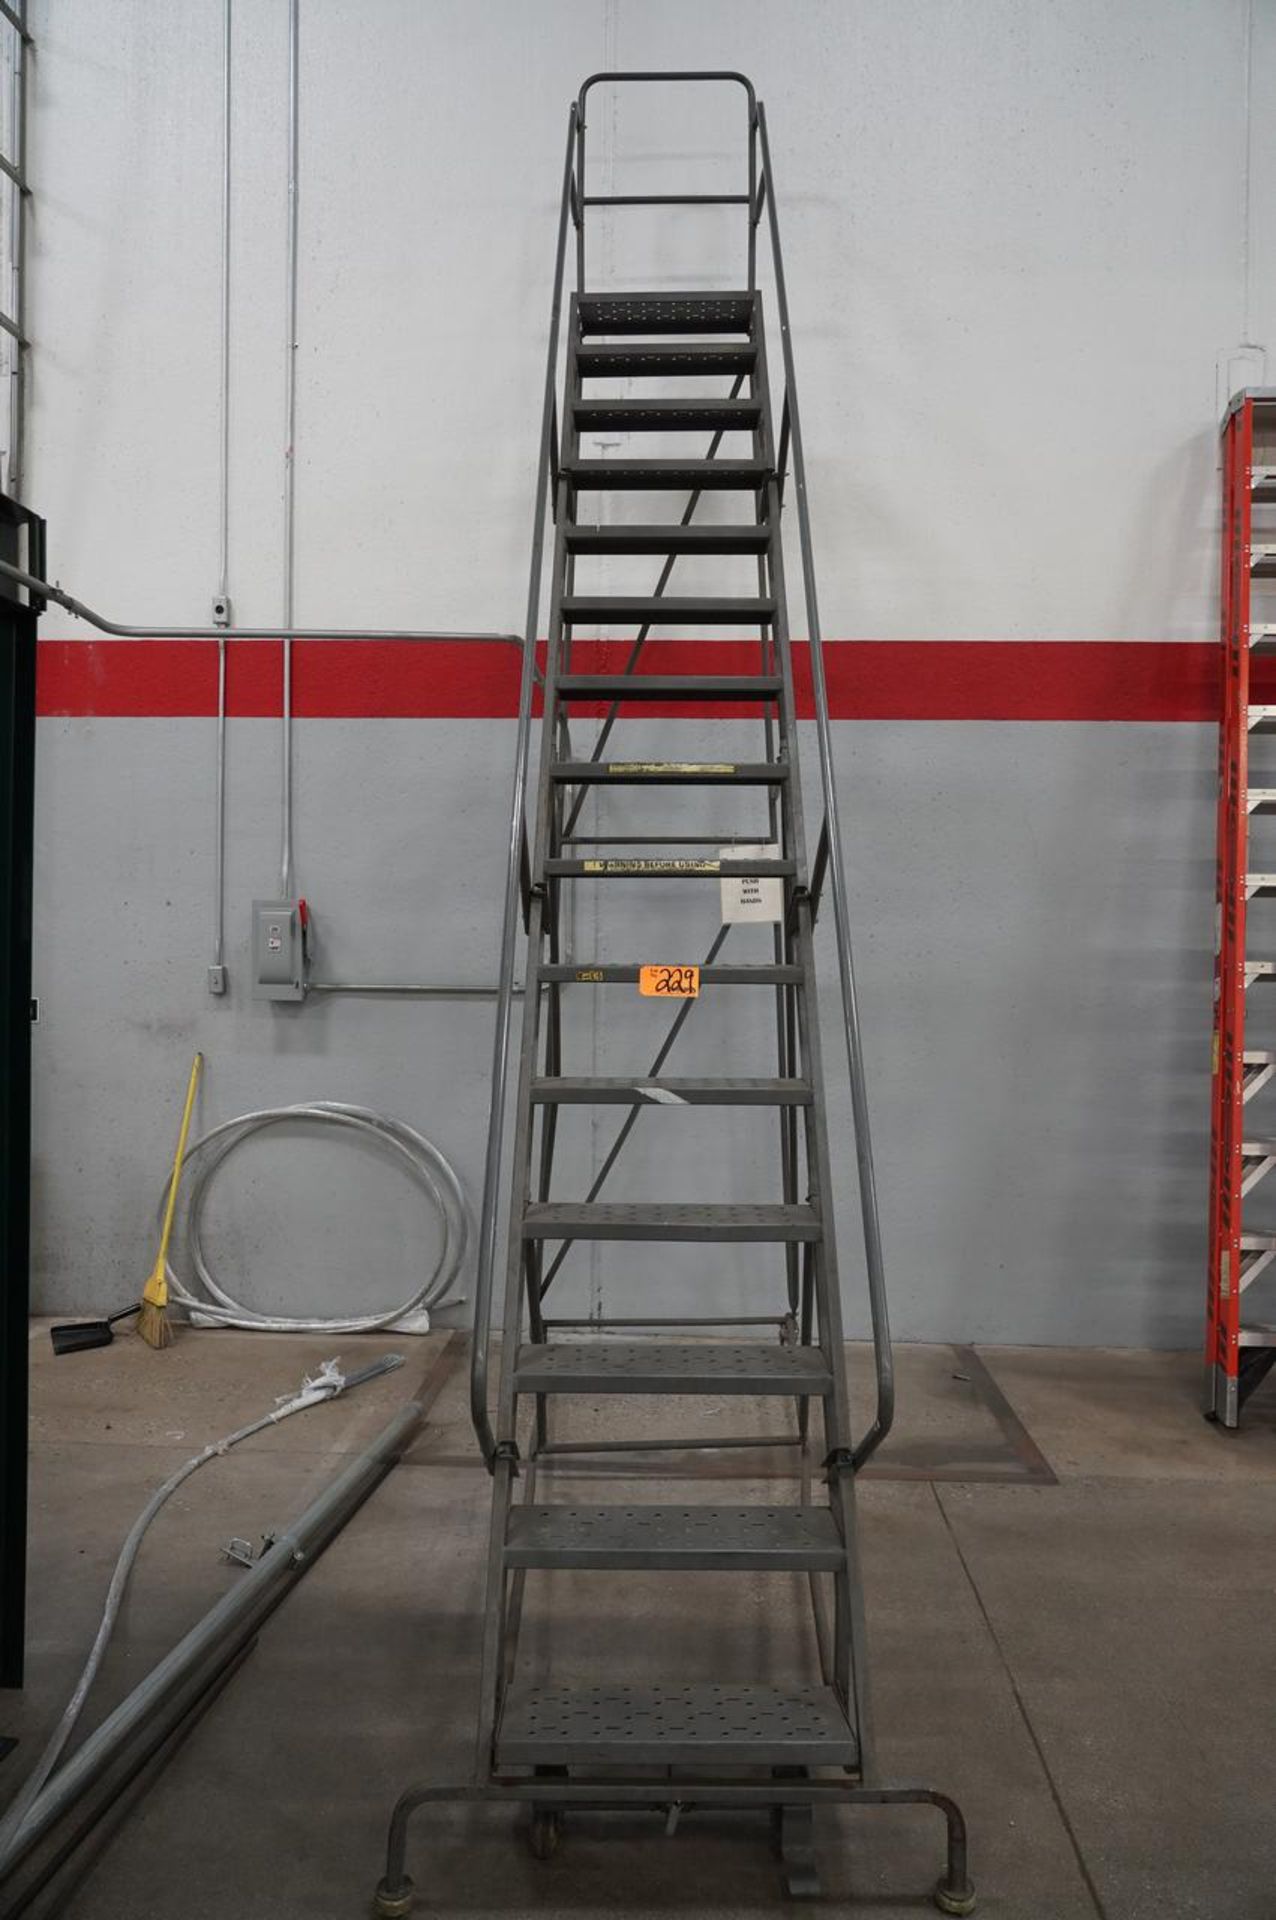 15 Step Rolling safety Ladder - Image 2 of 2